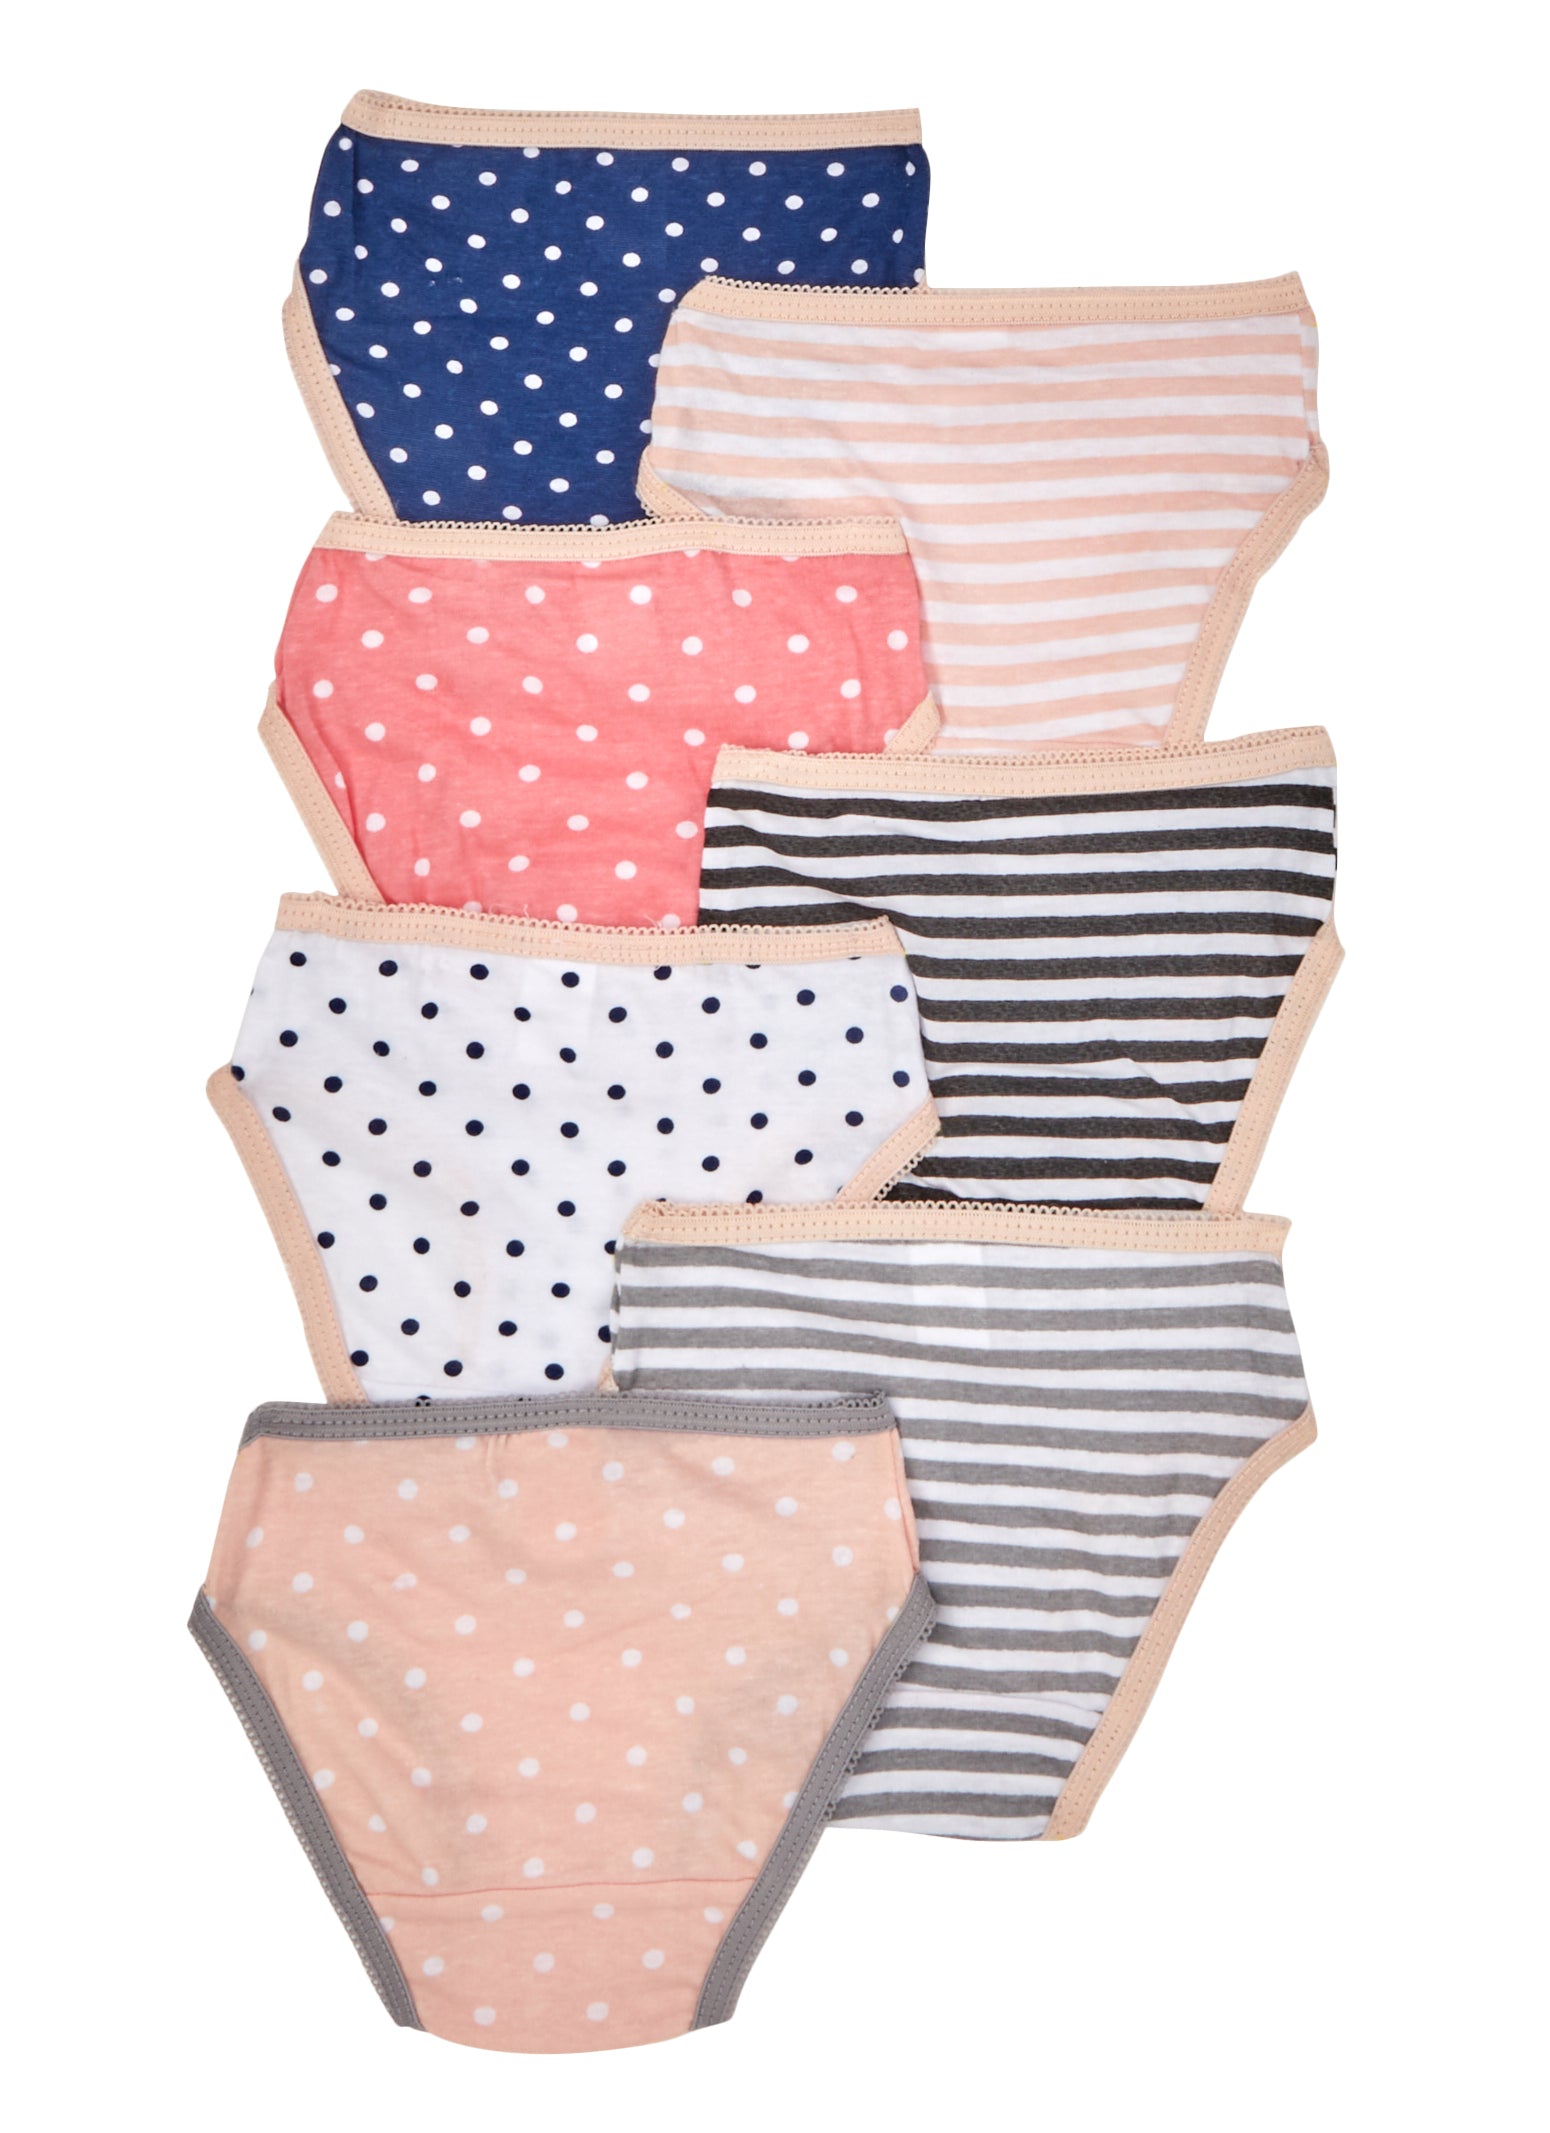 Little Girls Set of 10 Polka Dot Print Panties - Multi Color